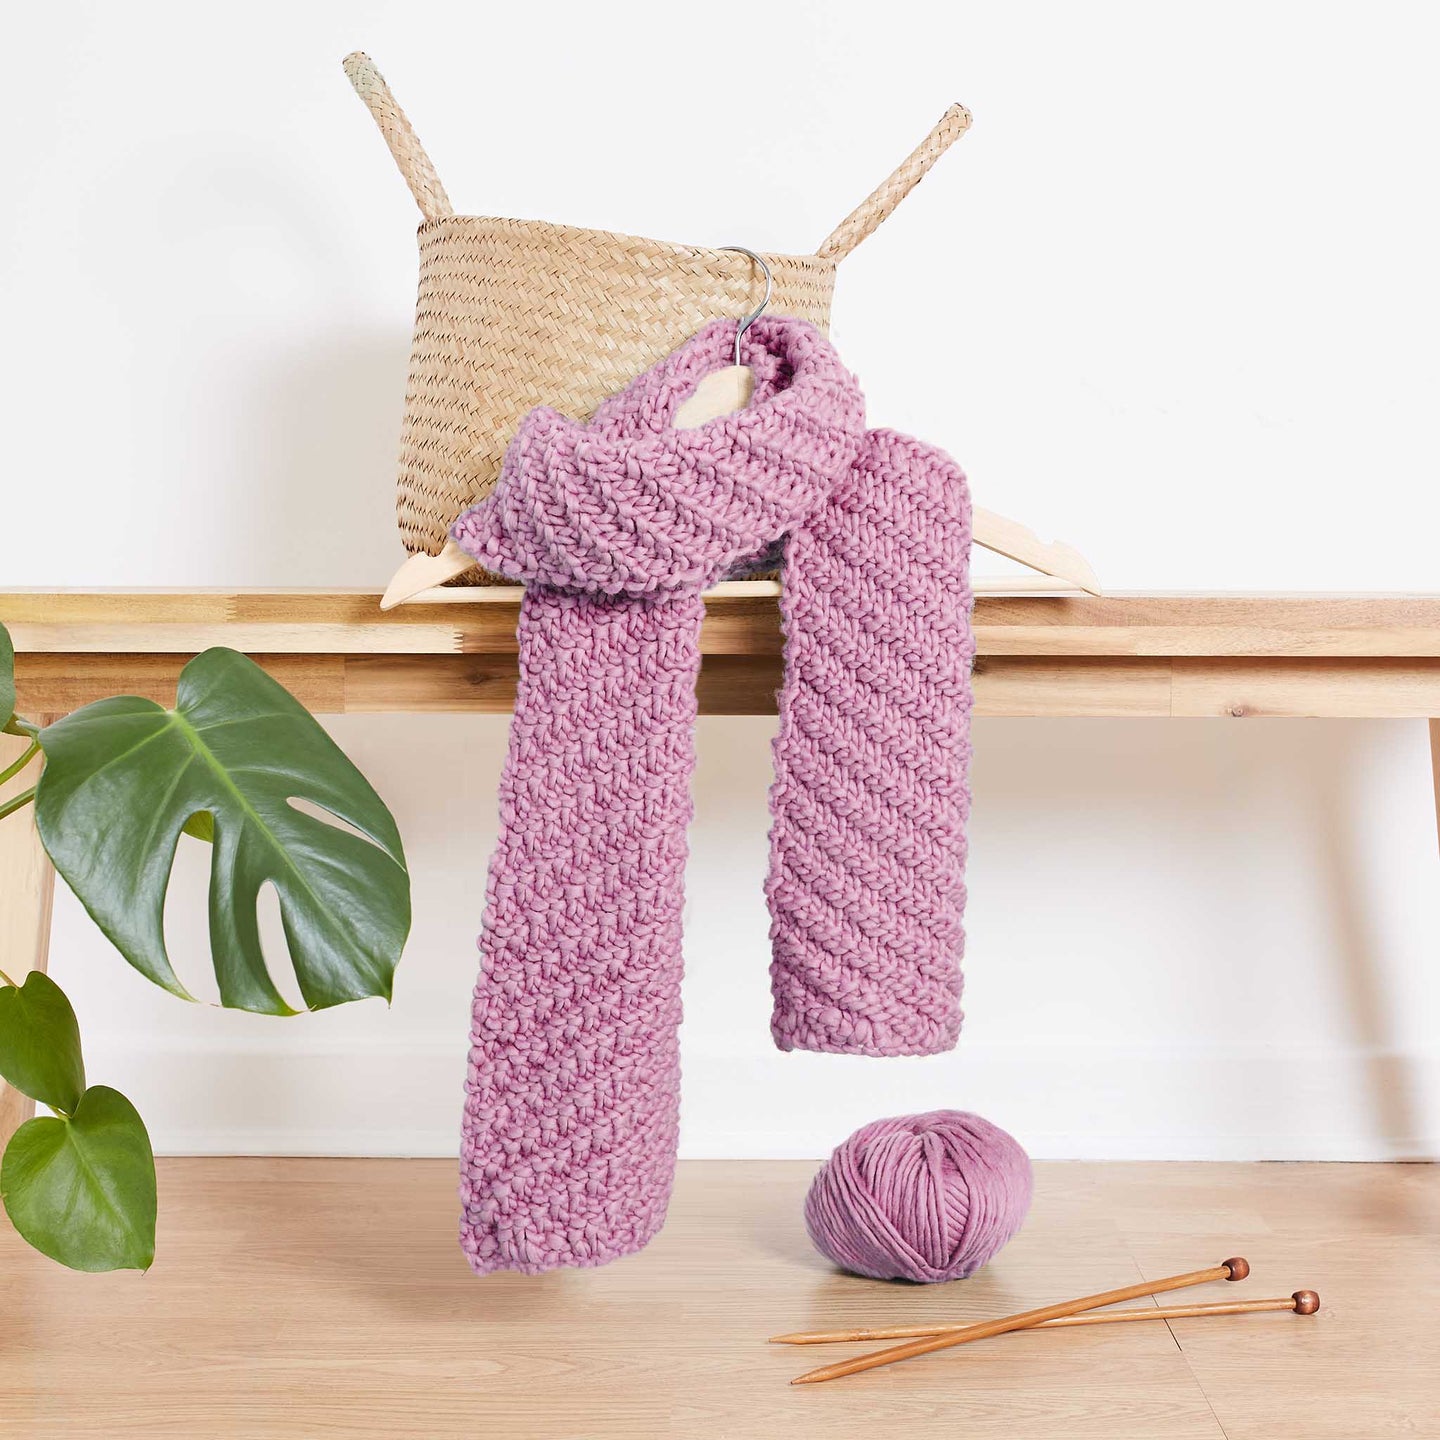 Generic Knitting Needles @ Best Price Online